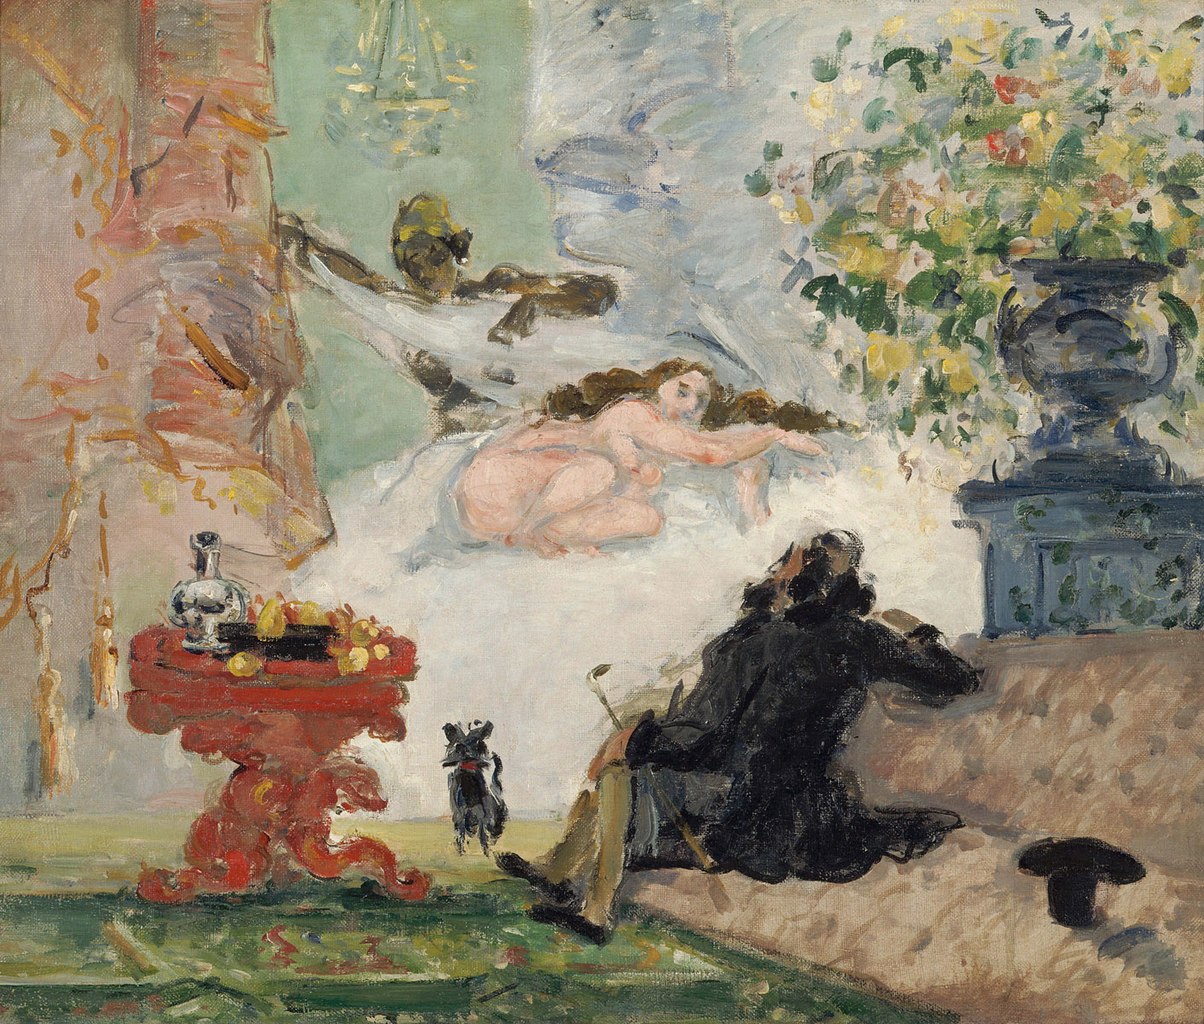 Paul Cézanne, A Modern Olympia (1873-1874; oil on canvas, 46 x 55.5 cm; Paris, Musée d'Orsay)